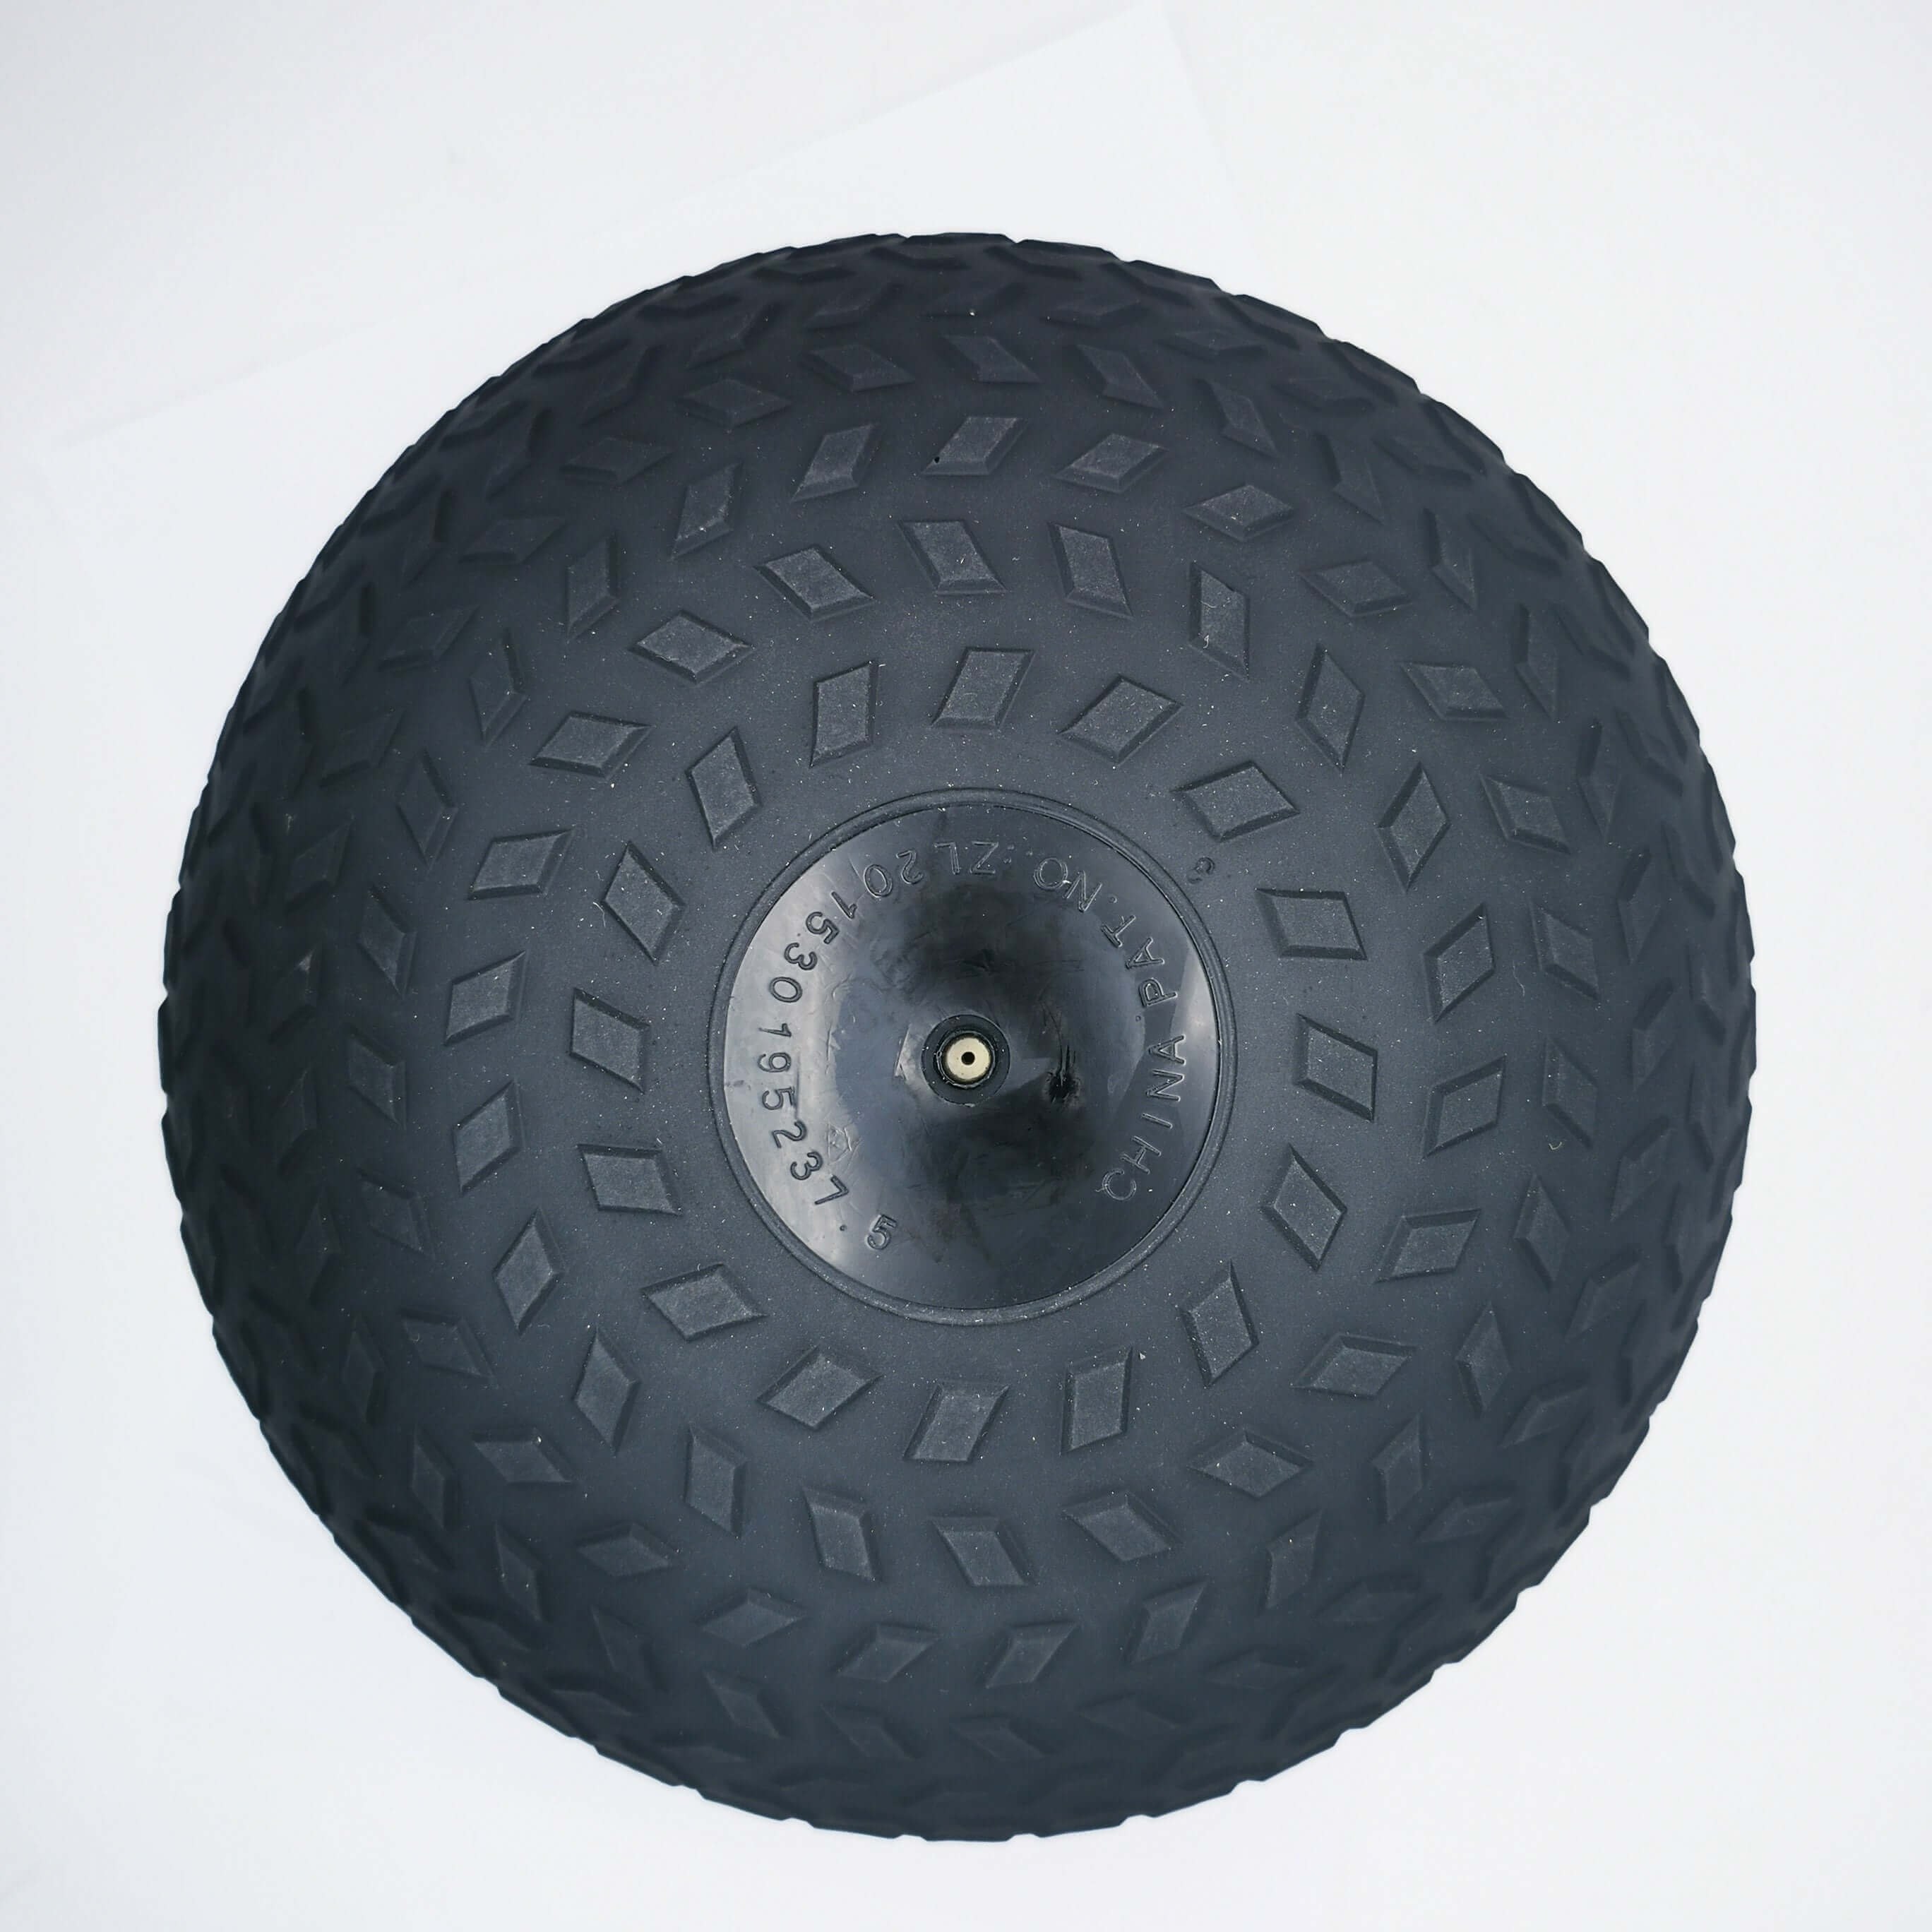 15kg Tyre Thread Slam Balls Fitness Exercise Sang Bag | INSOURCE